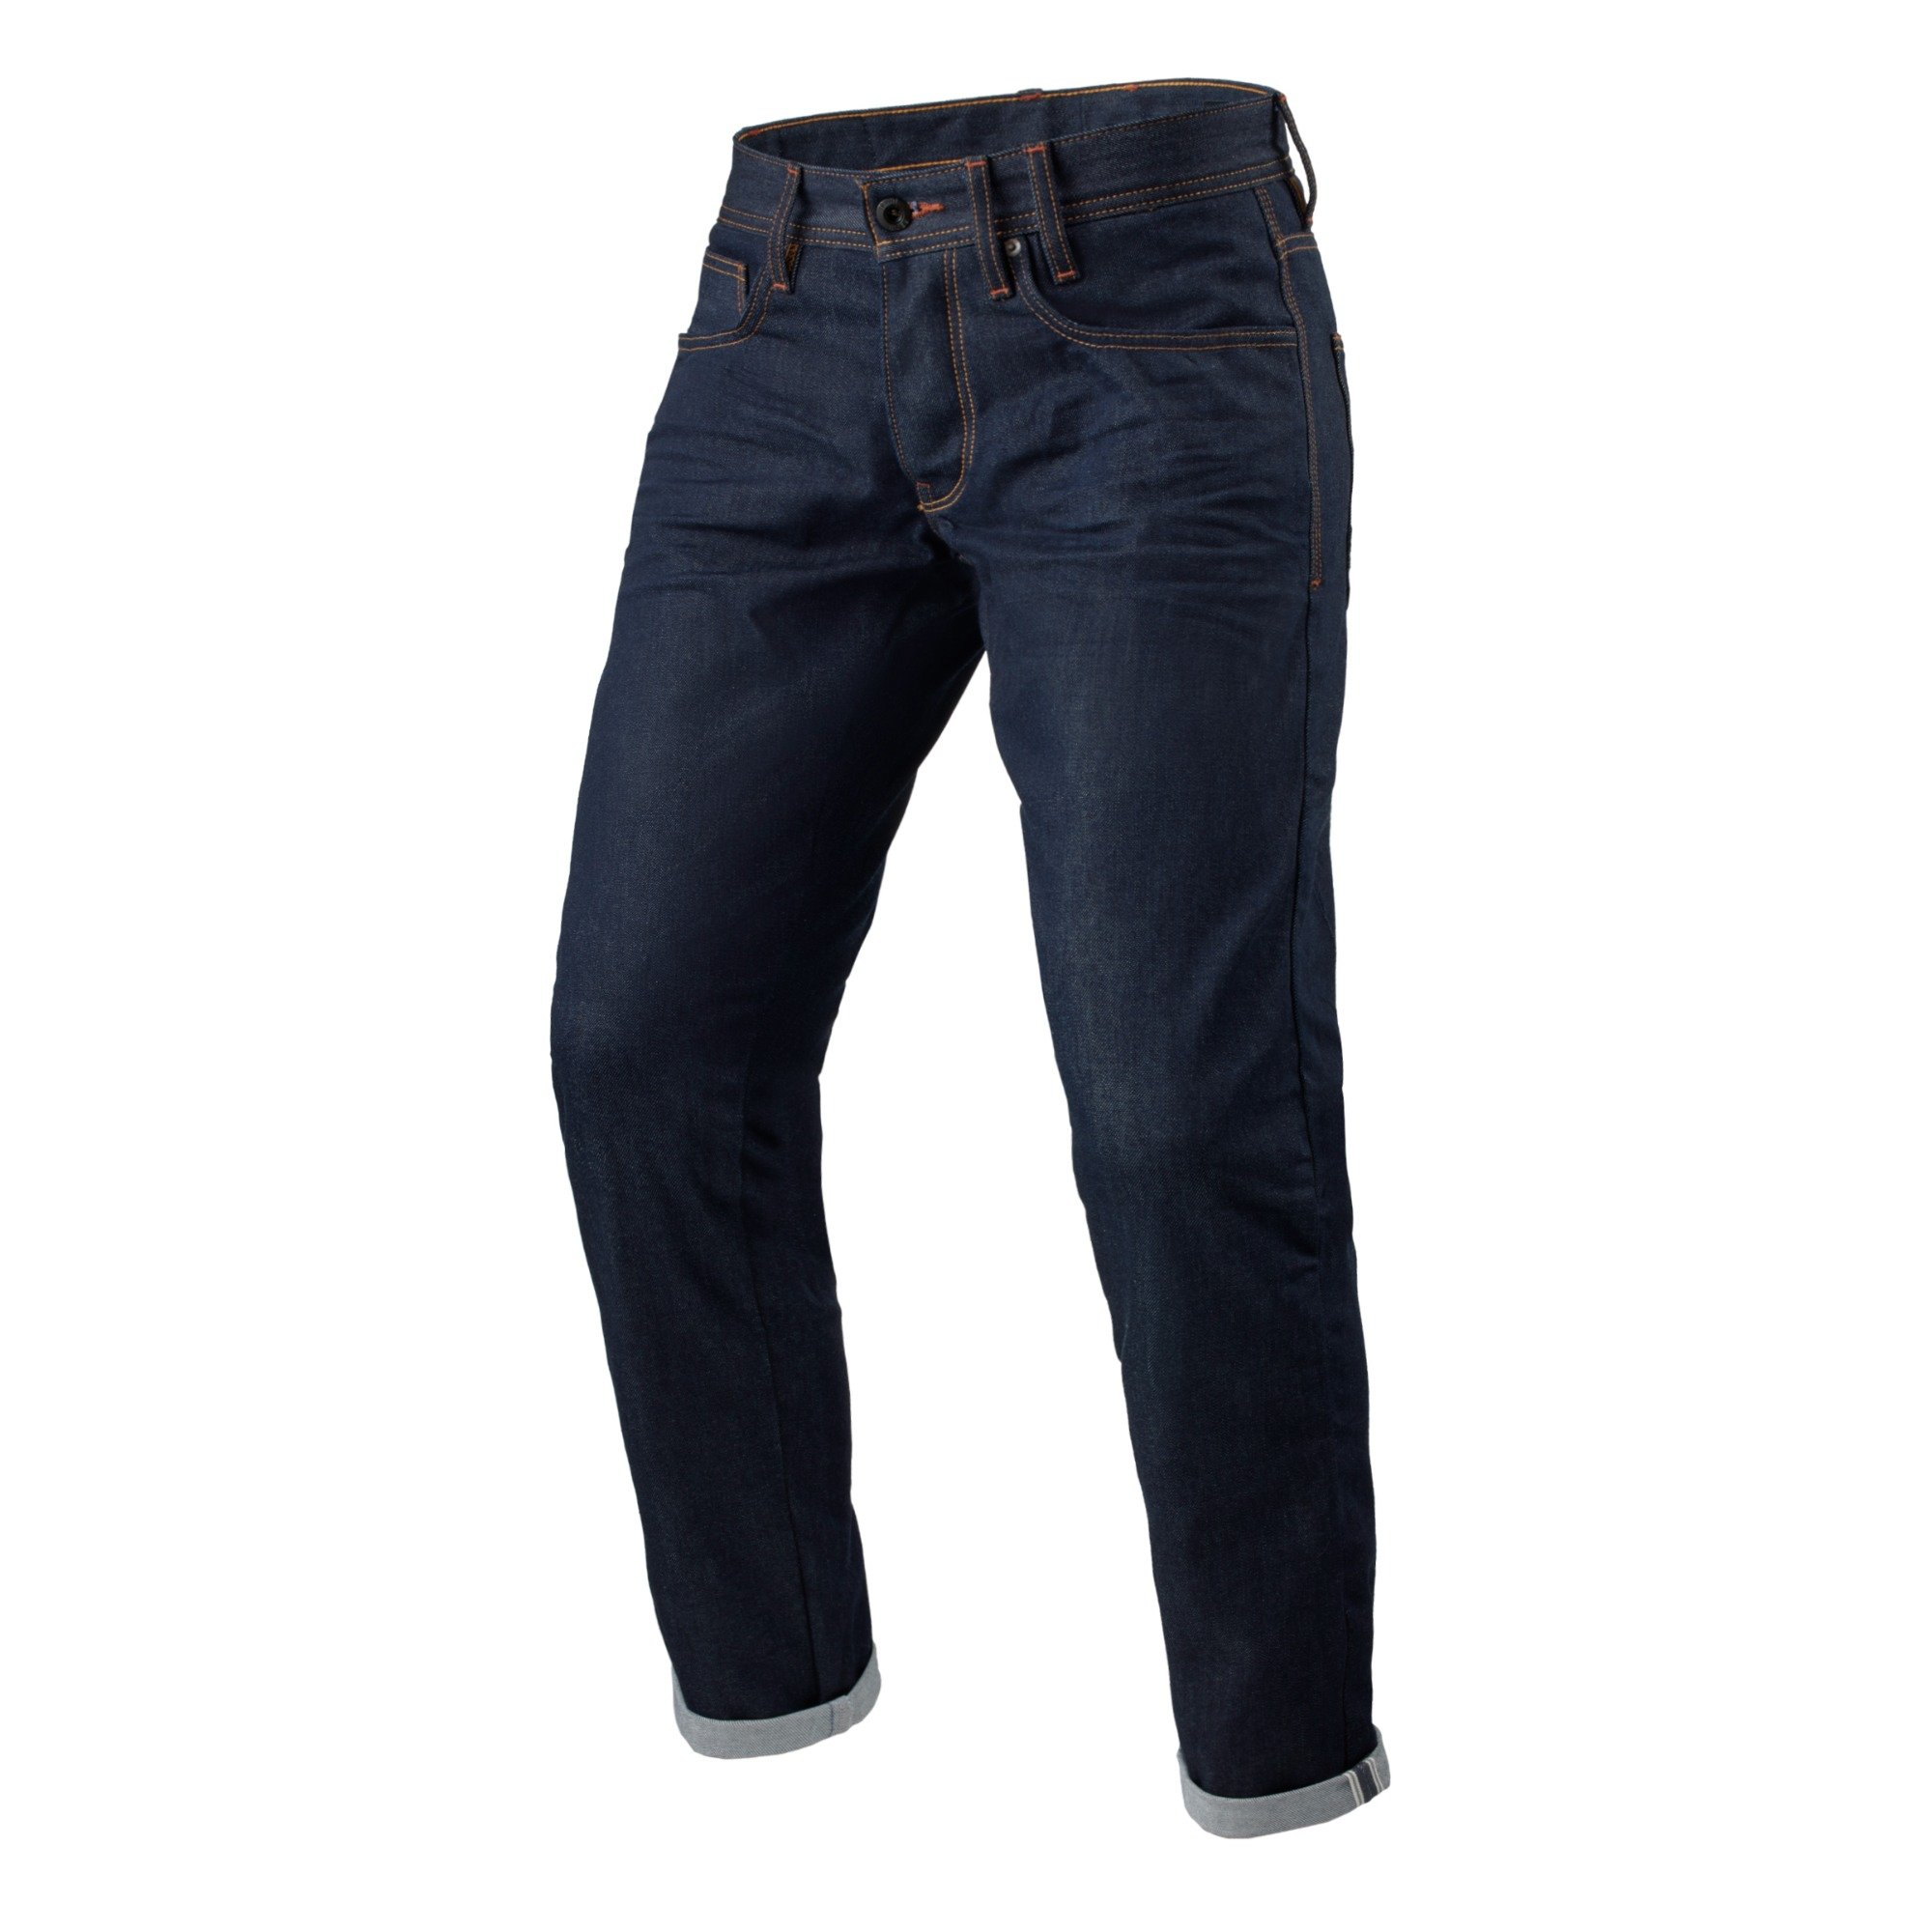 Image of REV'IT! Jeans Lewis Selvedge TF Dark Blue L34 Motorcycle Pants Size L34/W30 EN